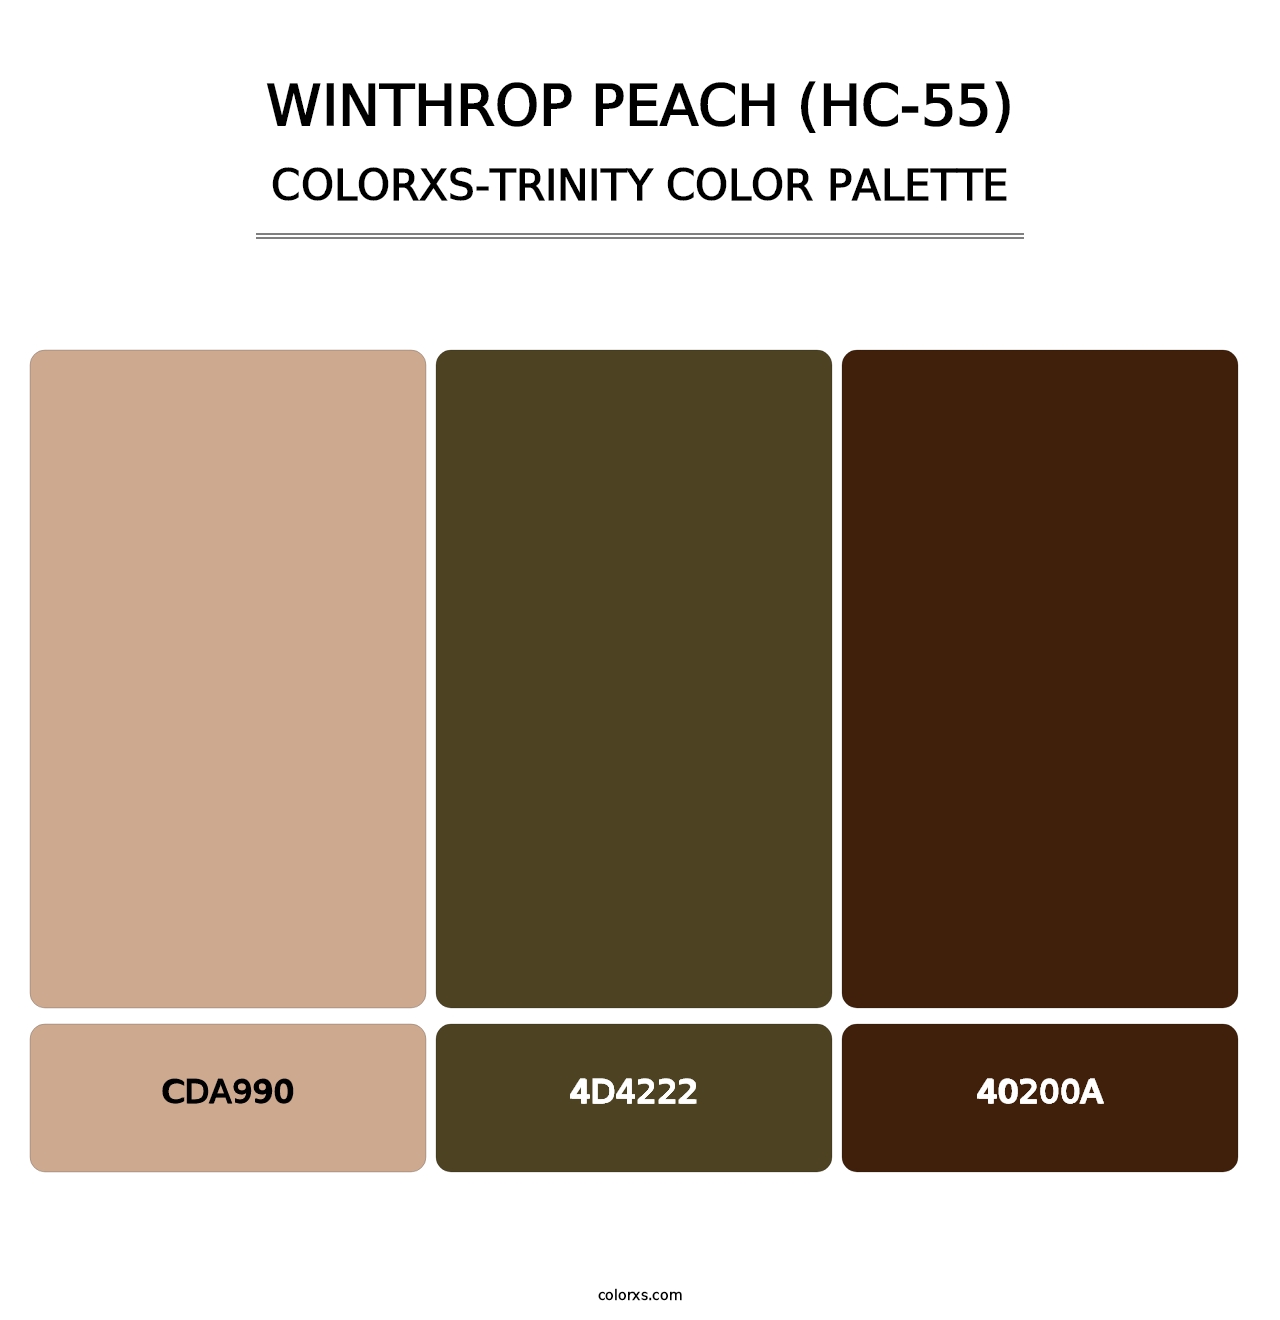 Winthrop Peach (HC-55) - Colorxs Trinity Palette